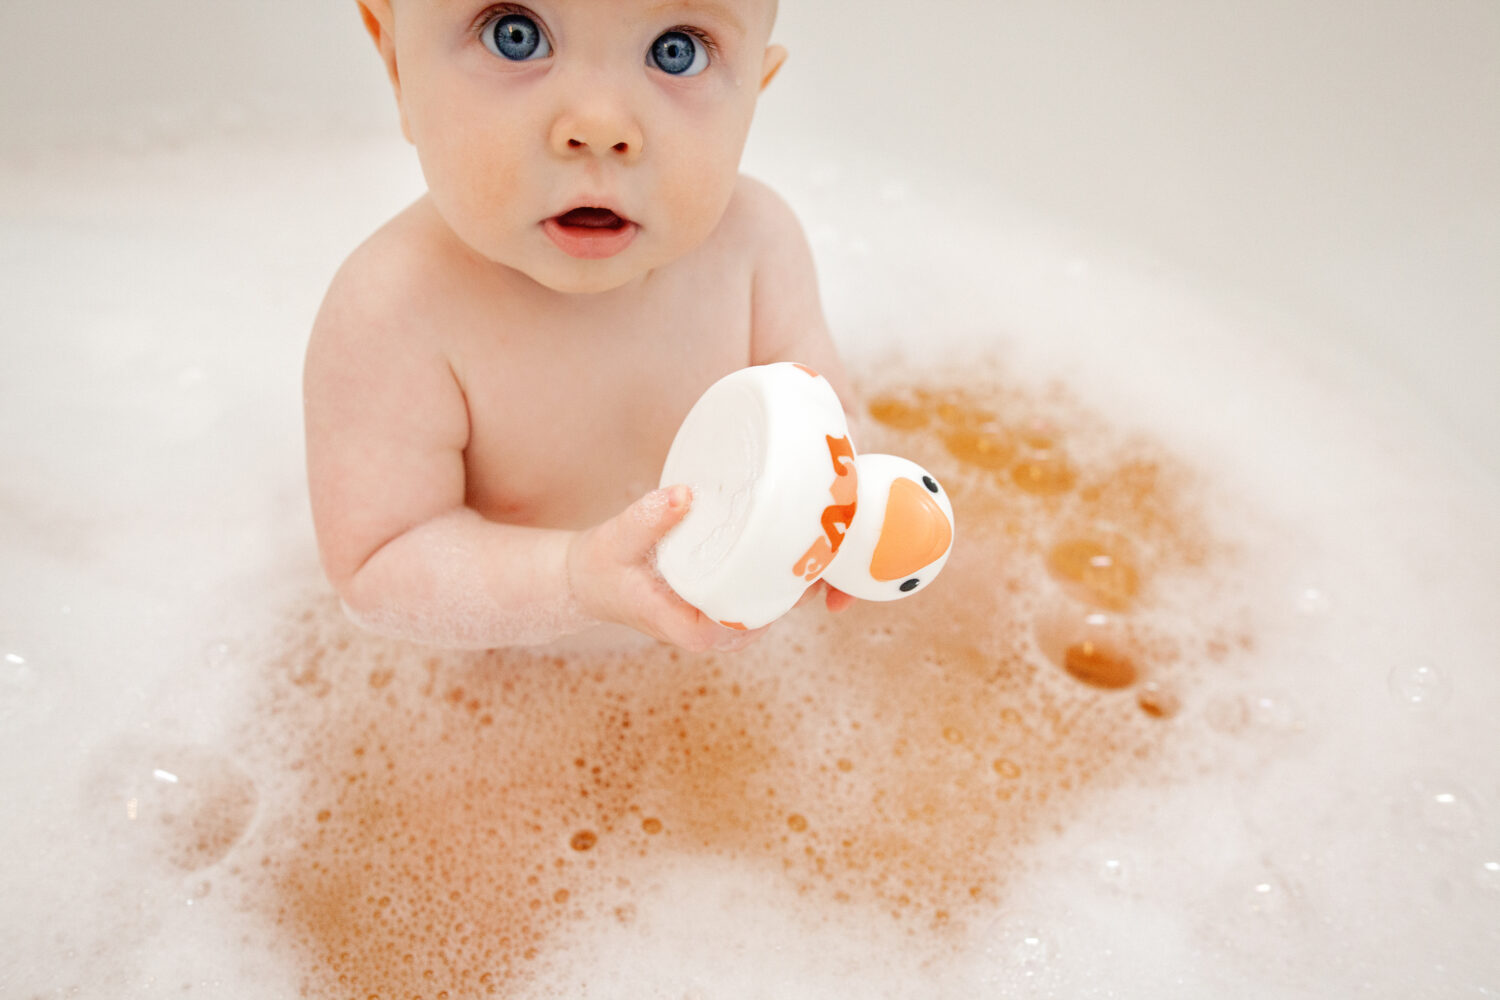 Baby boy holding Rubber duck in bathtub